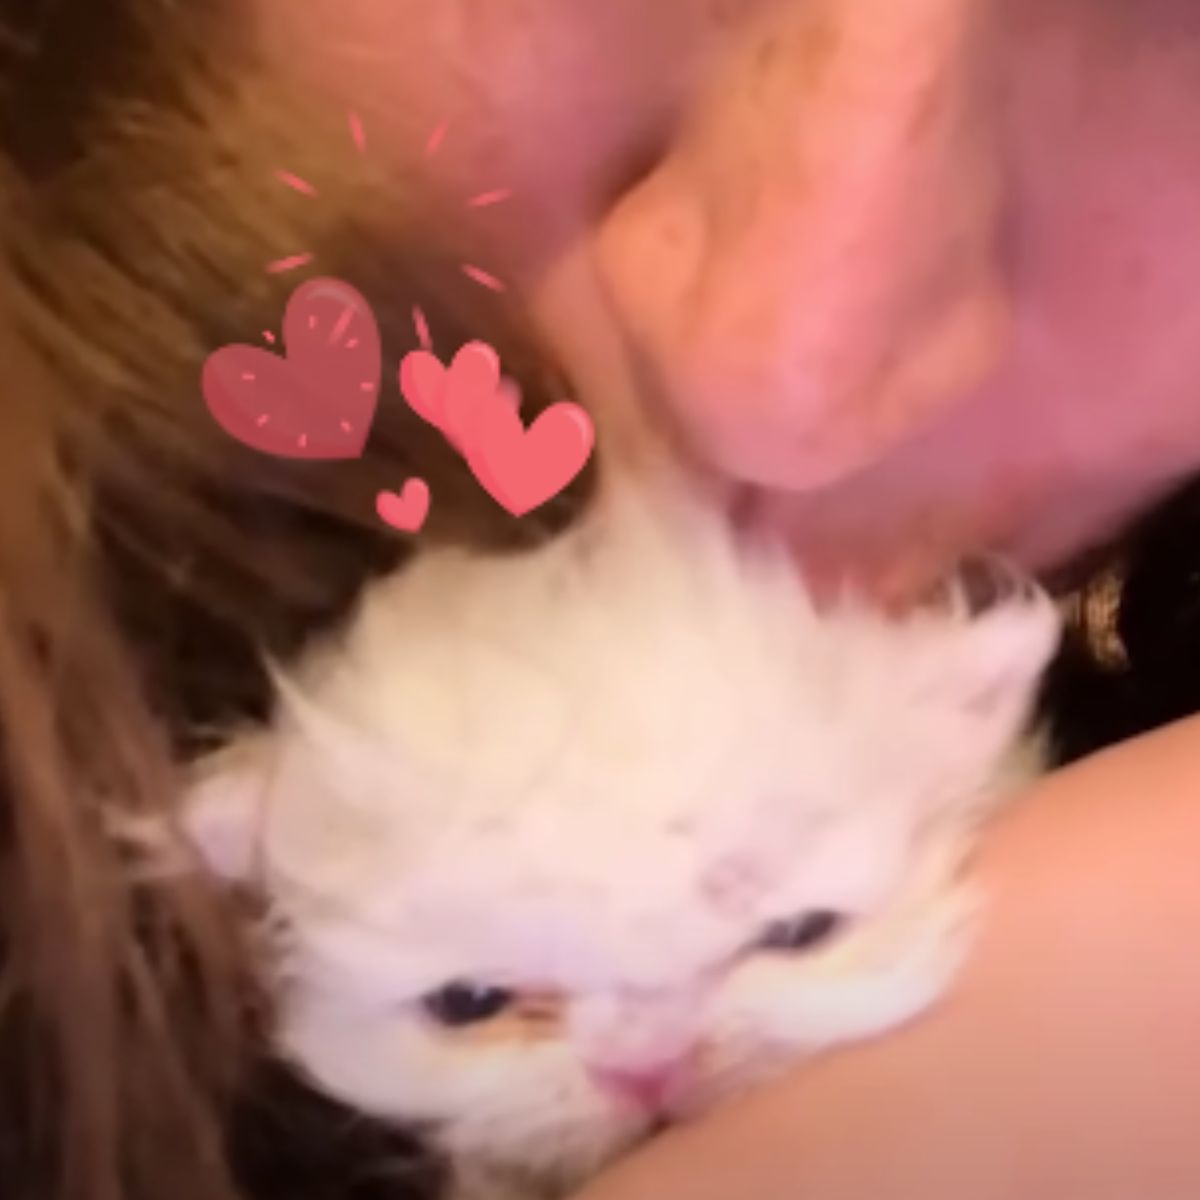 woman kissing the kitten